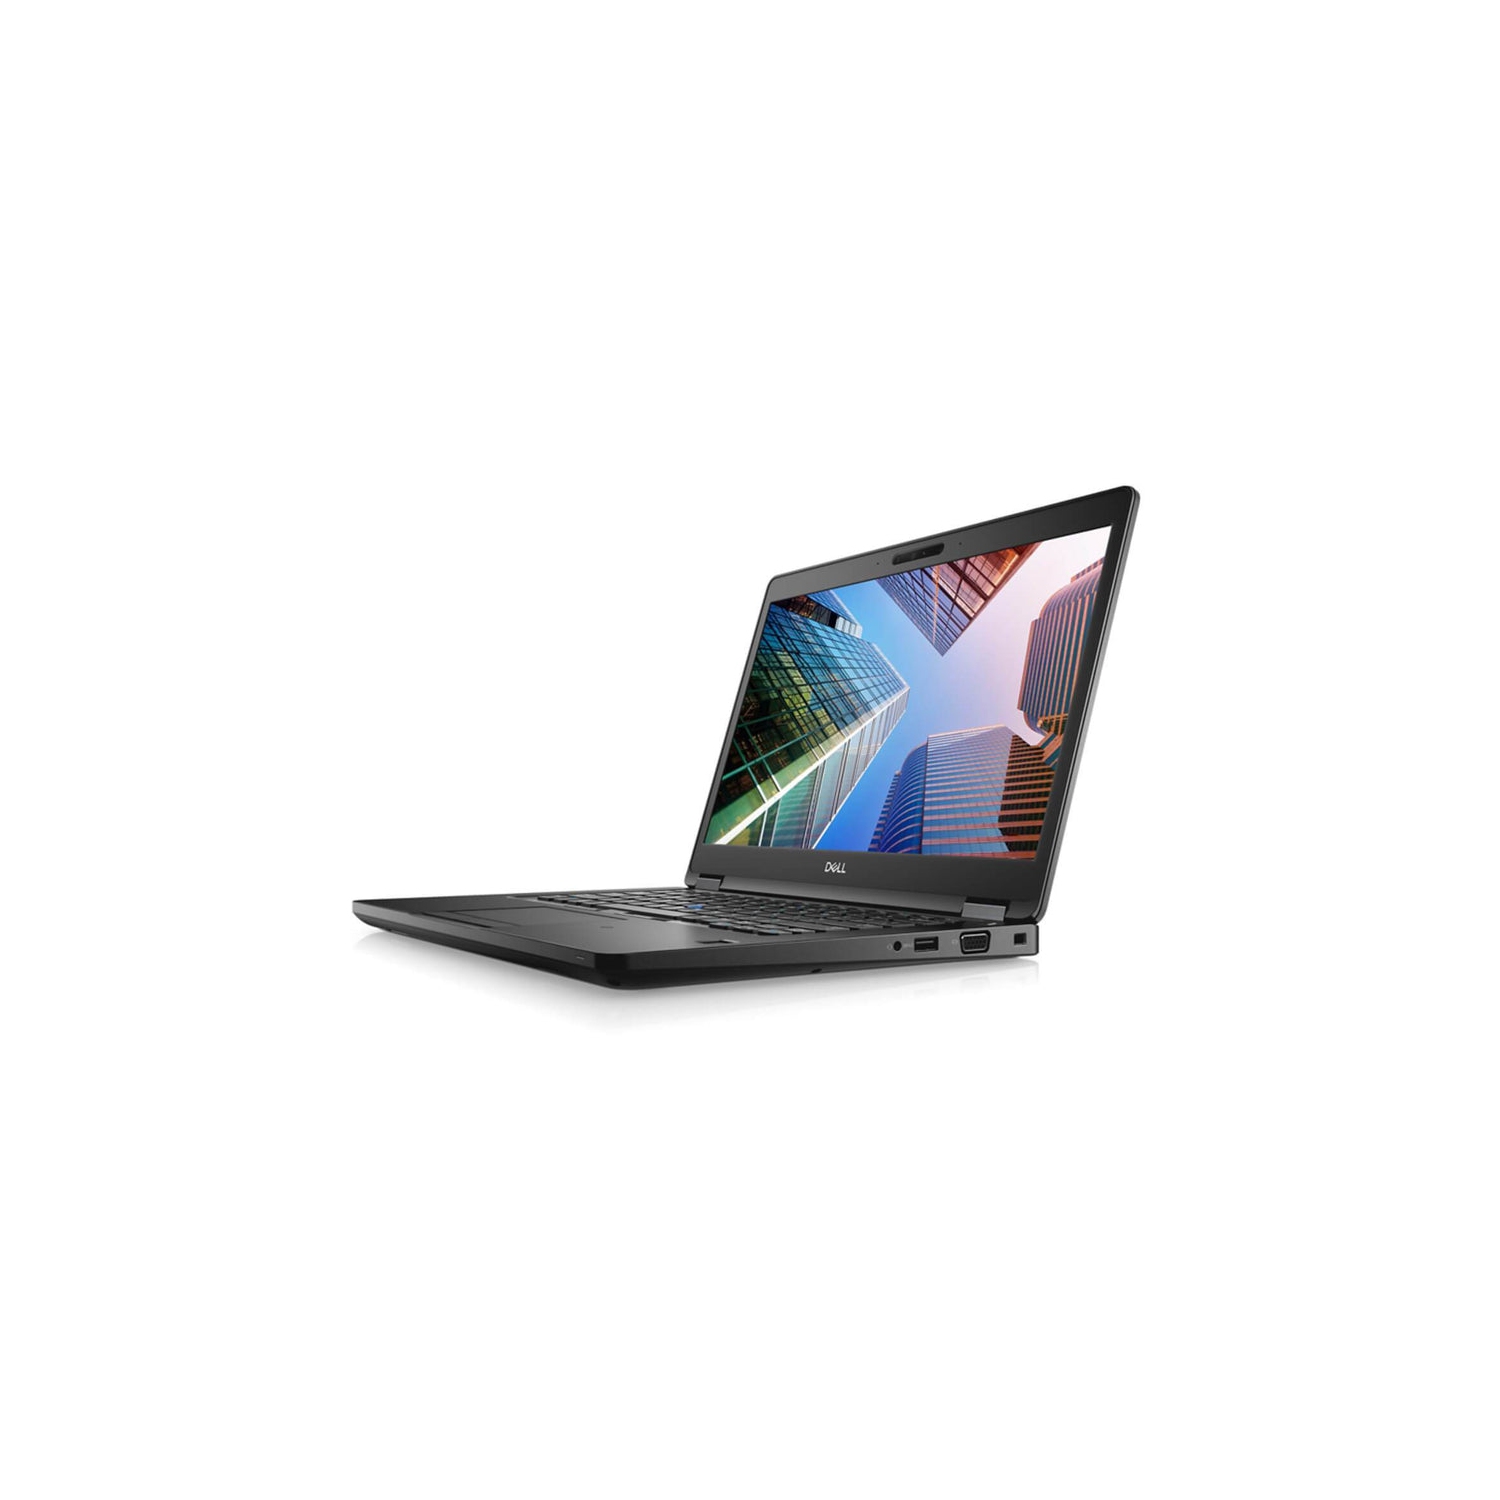 Dell latitude 5490- 14" FHD Business Laptop- Intel Quad Core i5-7300U- 24GB DDR4 RAM- 1TB SSD- Webcam- HDMI- Windows 10 Pro 64-bit- Refurbished (Grade A)